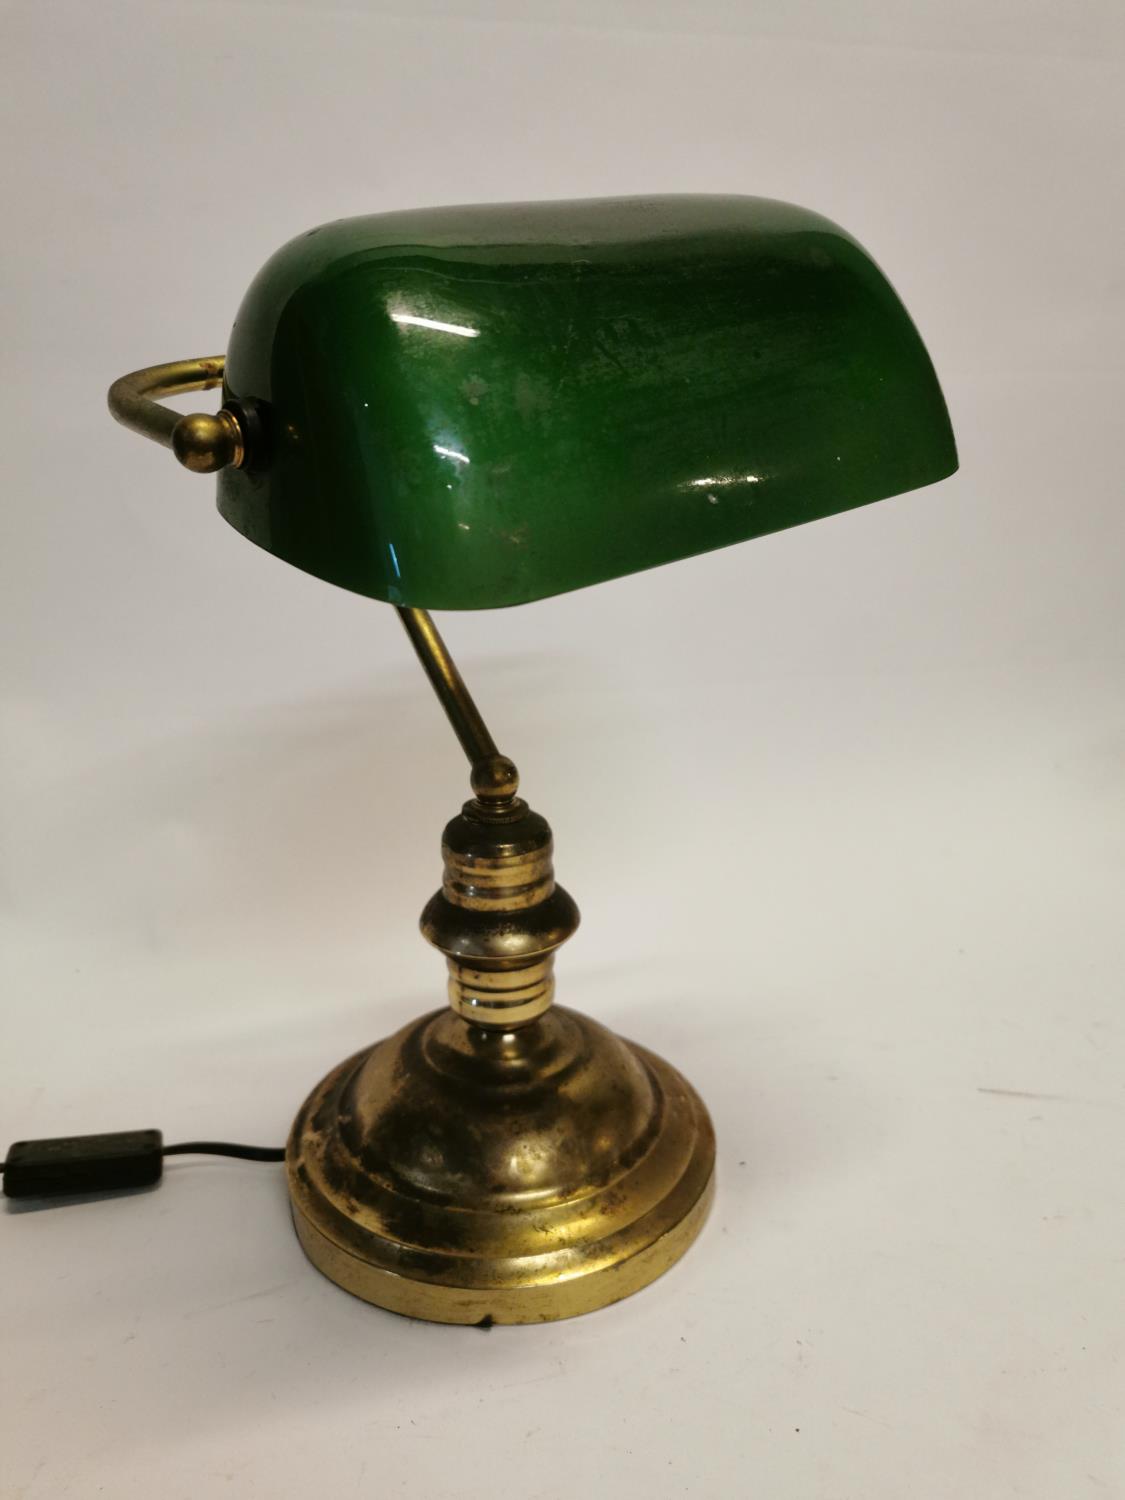 Brass desk lamp with green glass shade {37 cm H x 26 cm W x 22 cm D}.